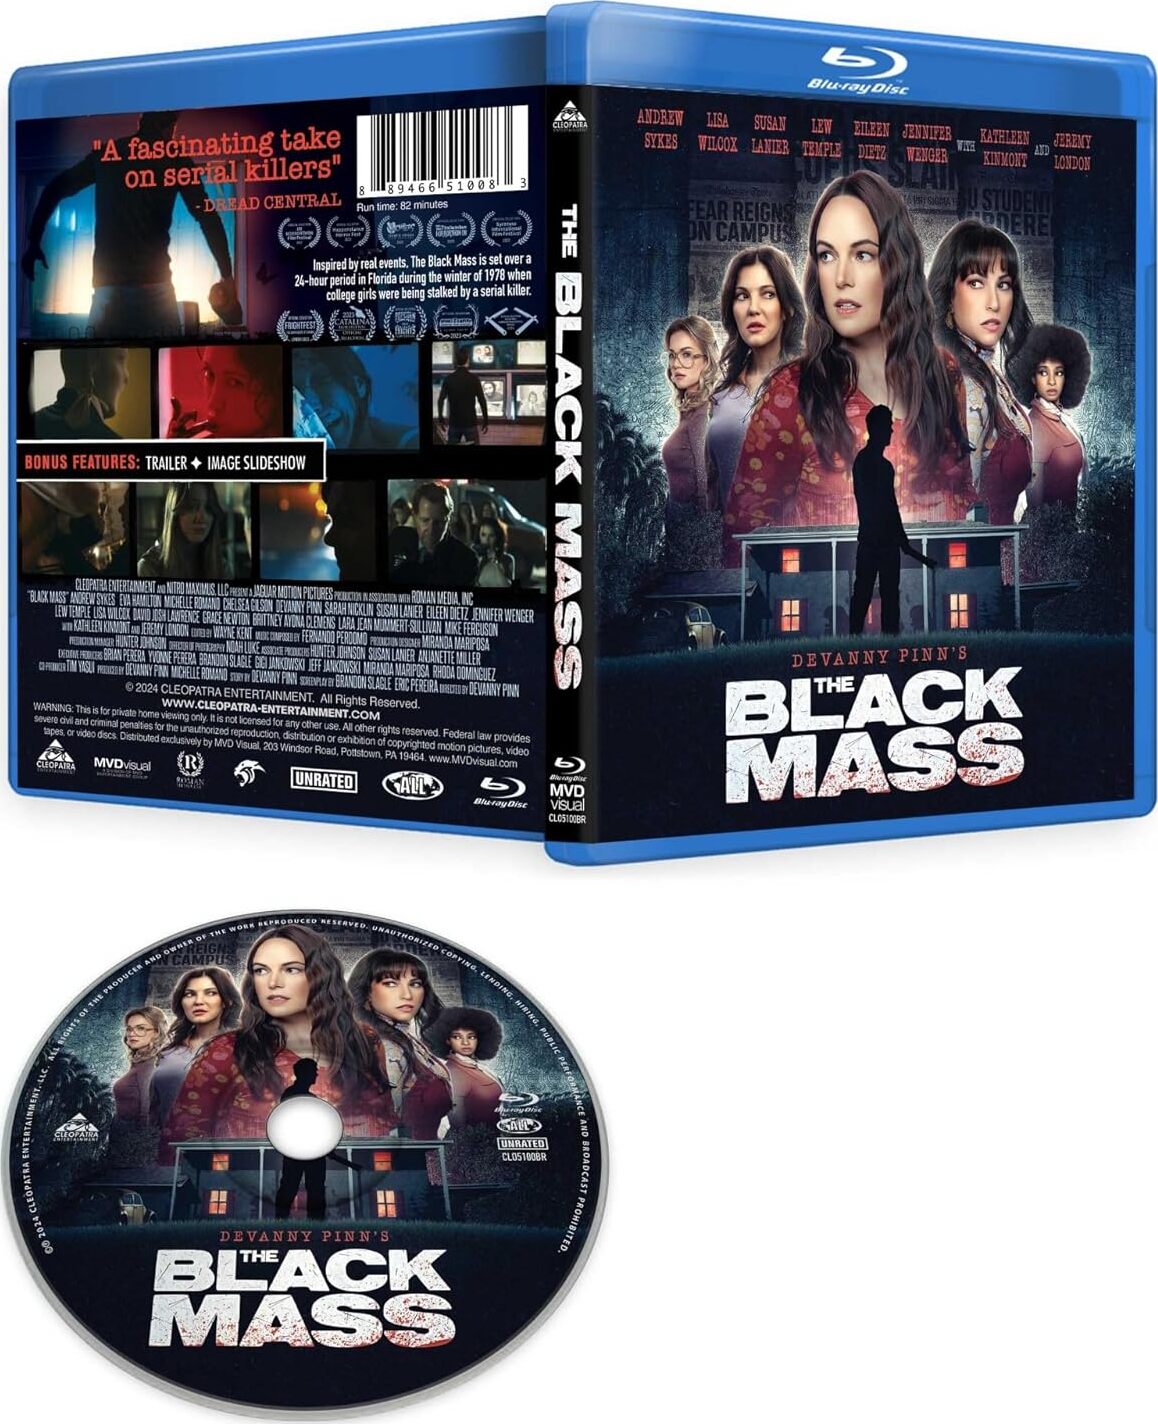 The Black Mass Blu-ray